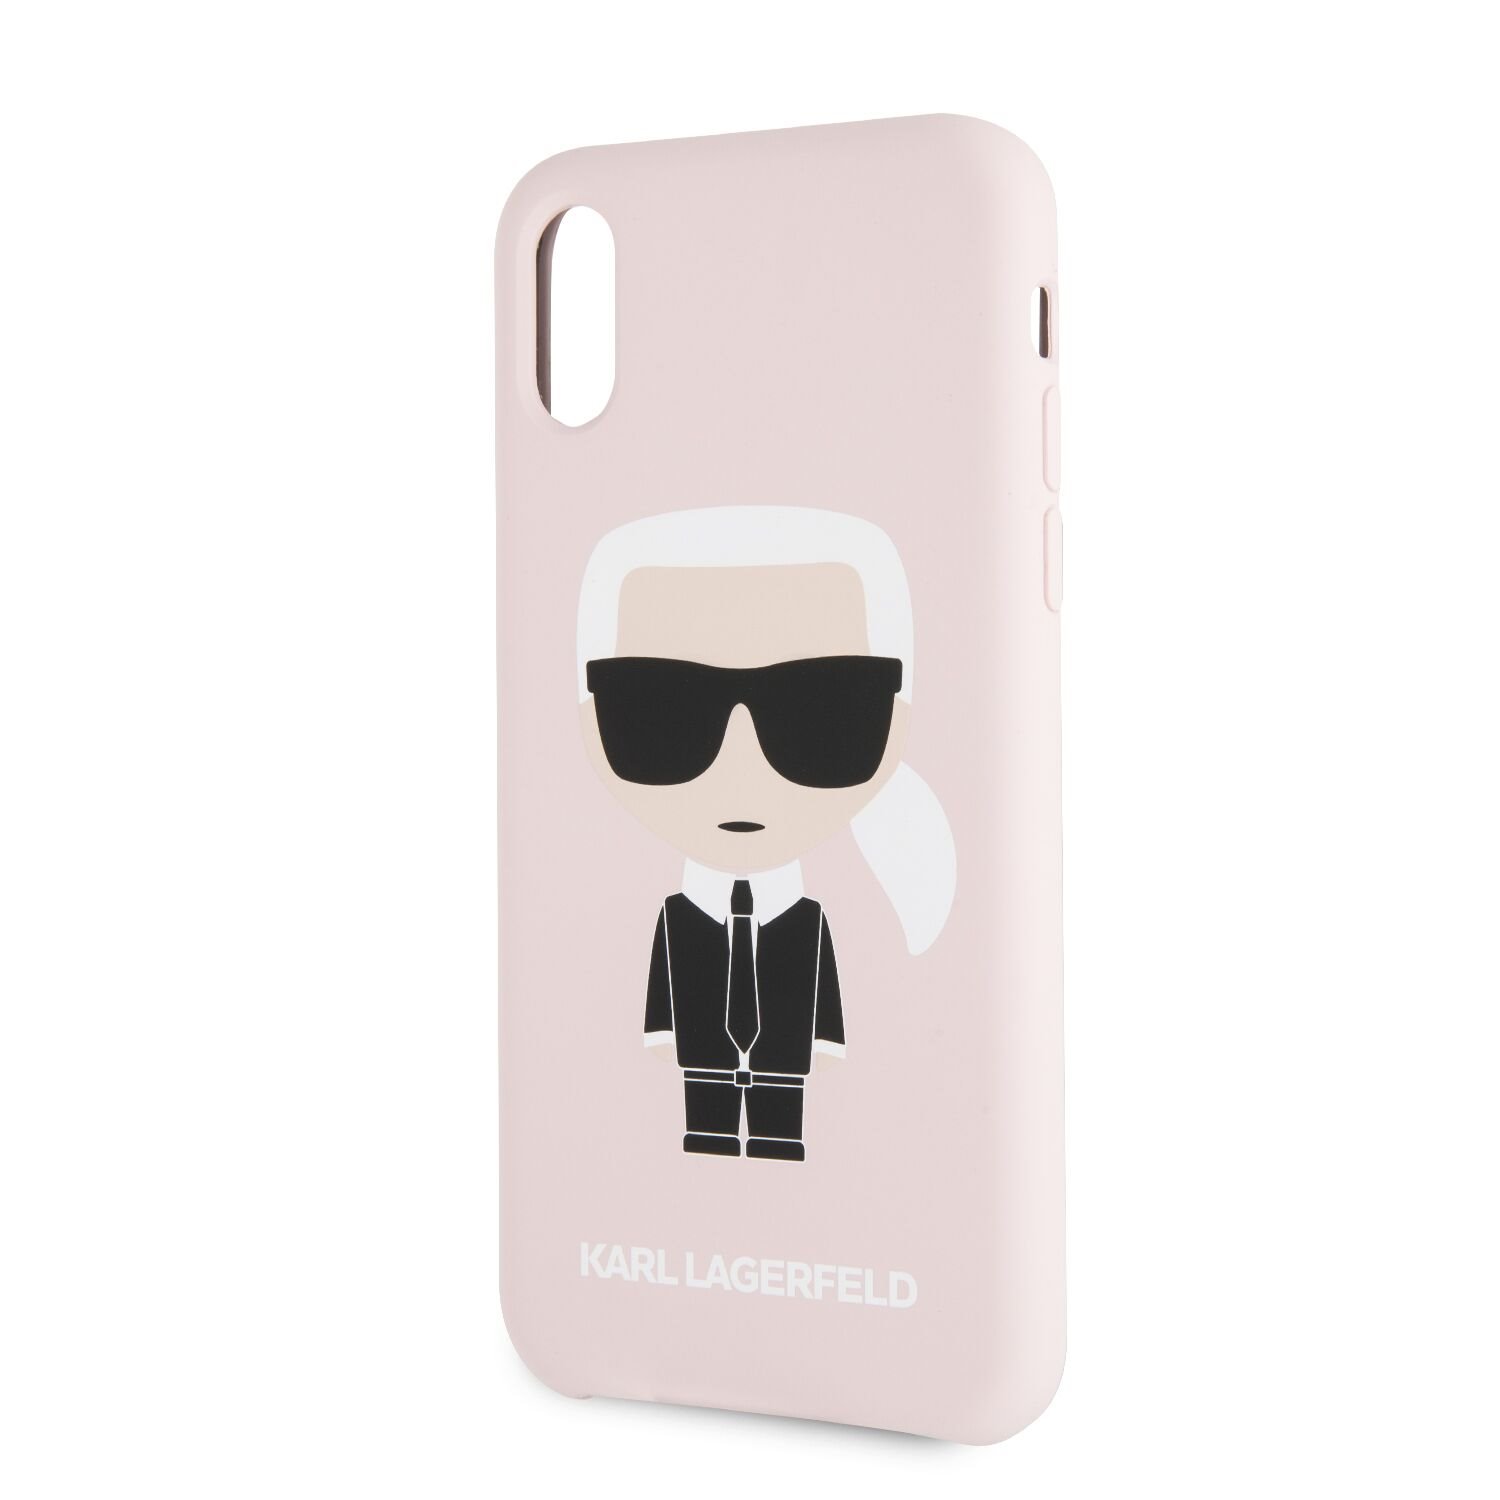 Silikónové puzdro Karl Lagerfeld Iconic Bull Body Apple iPhone X / XS, pink